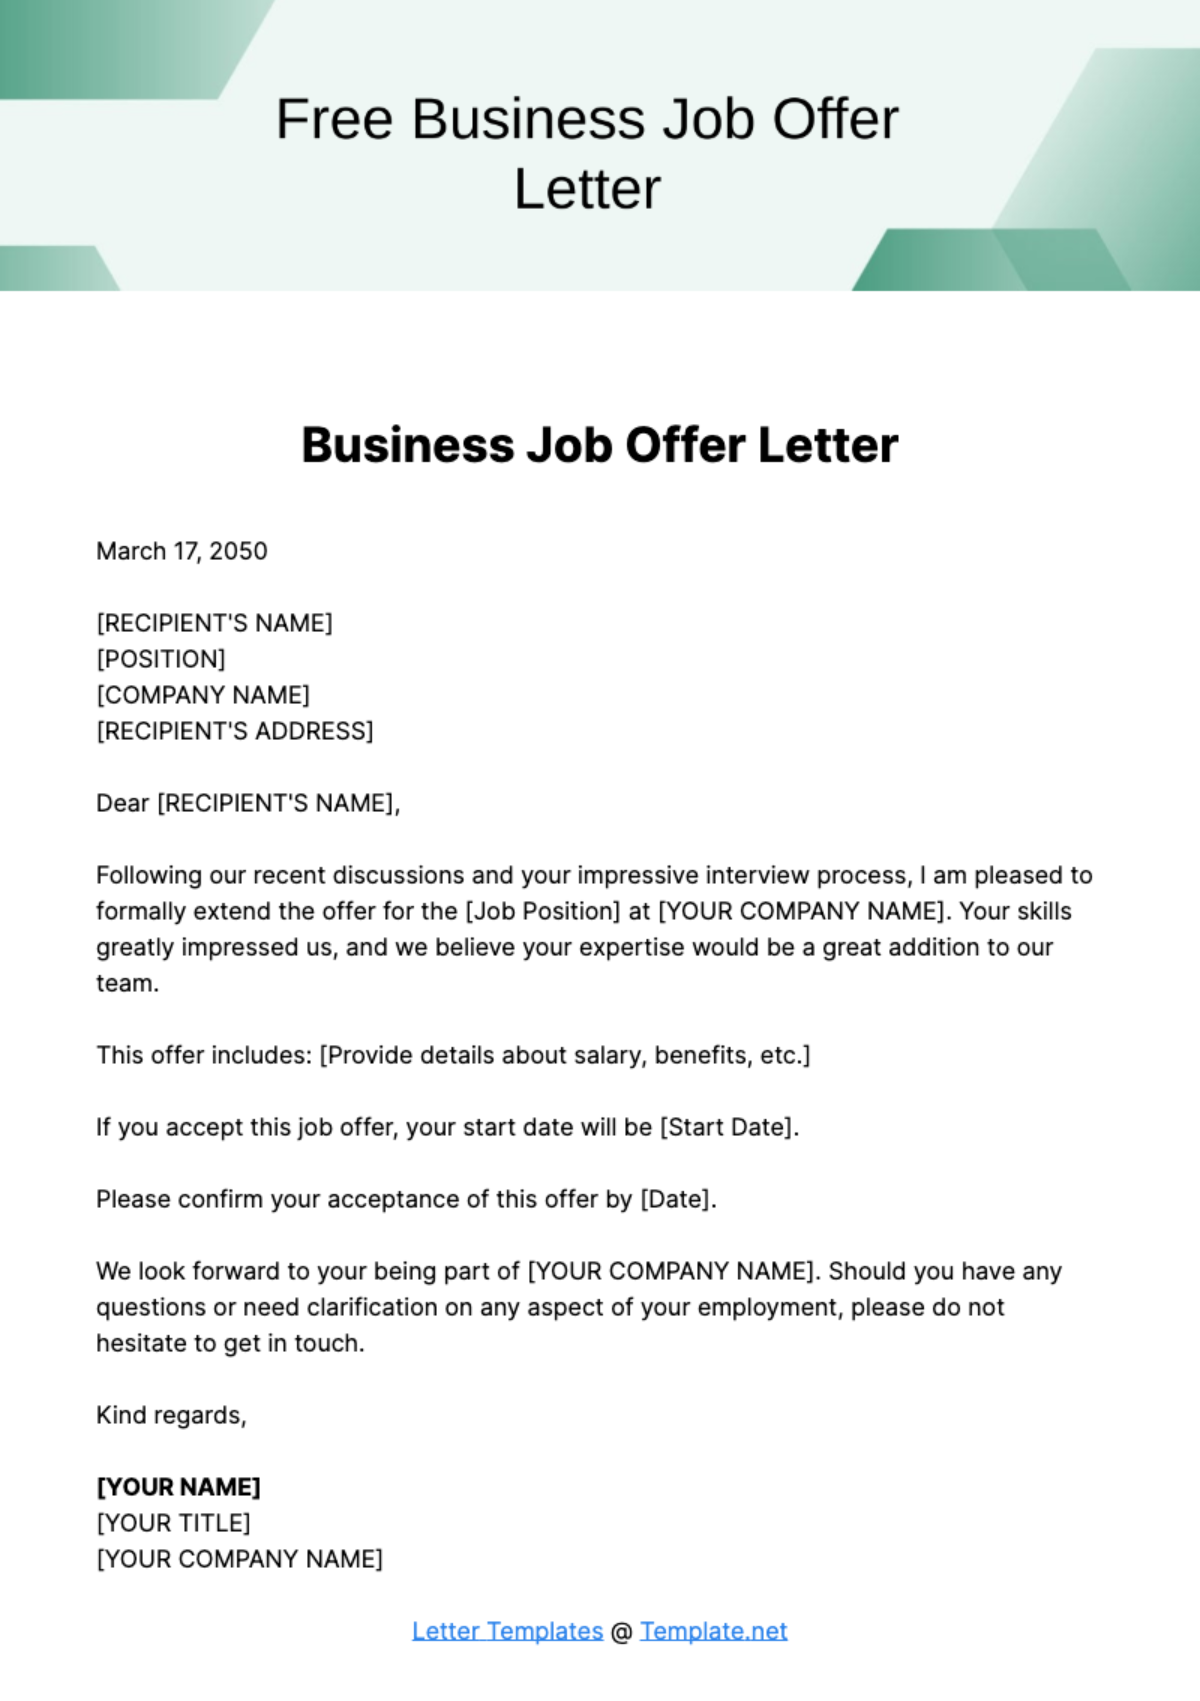 Business Job Offer Letter Template